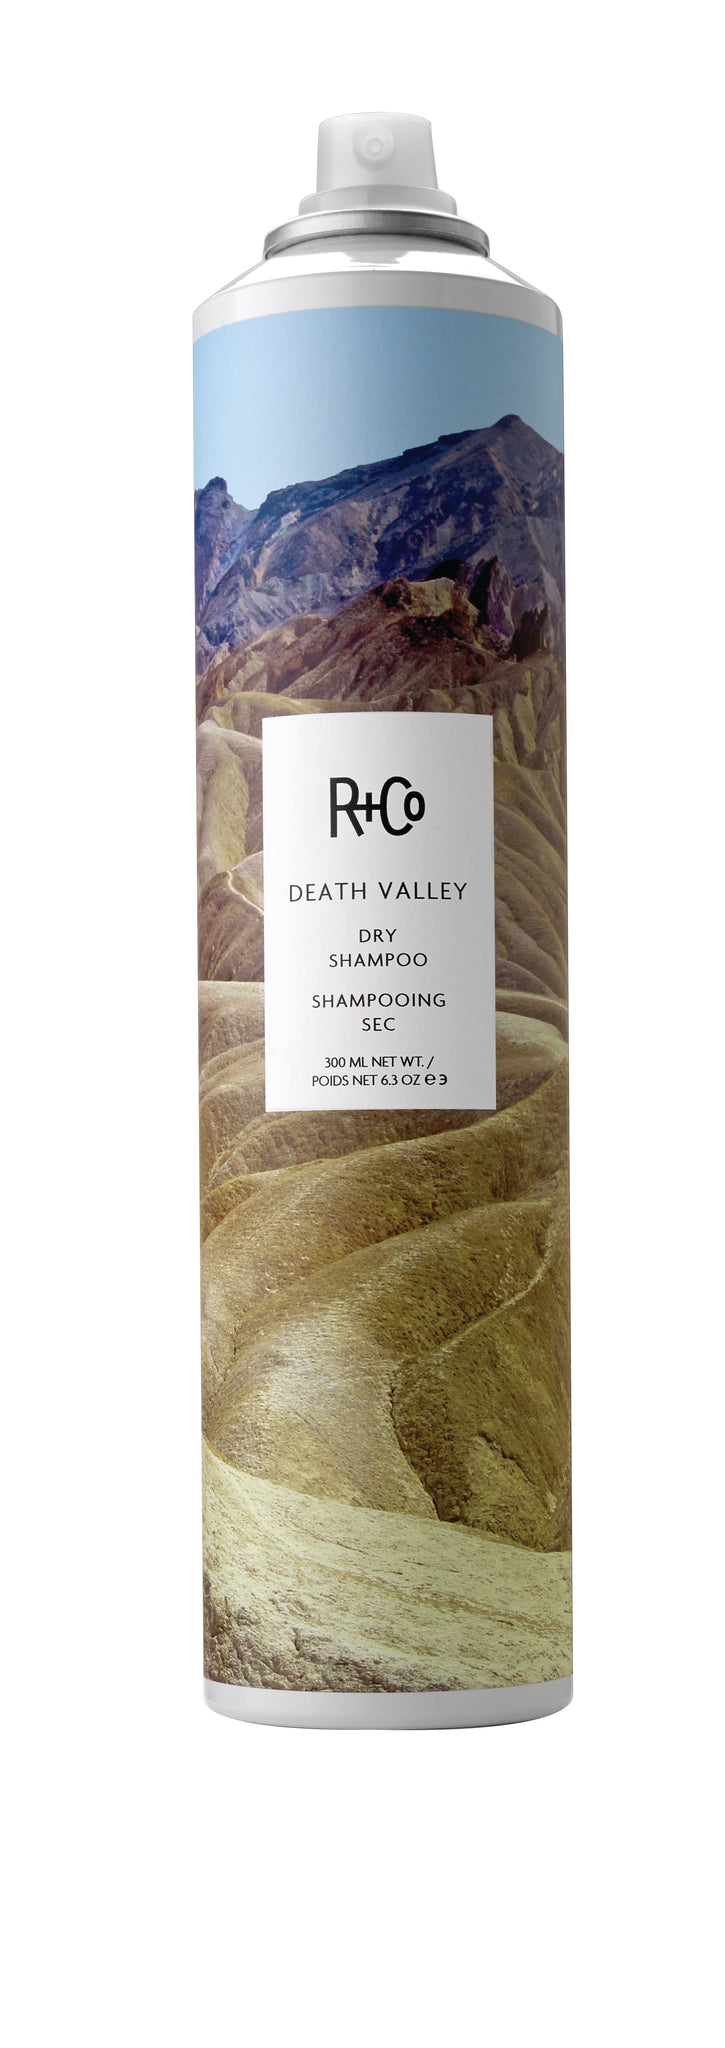 R+Co DEATH VALLEY / Dry Shampoo 300ml